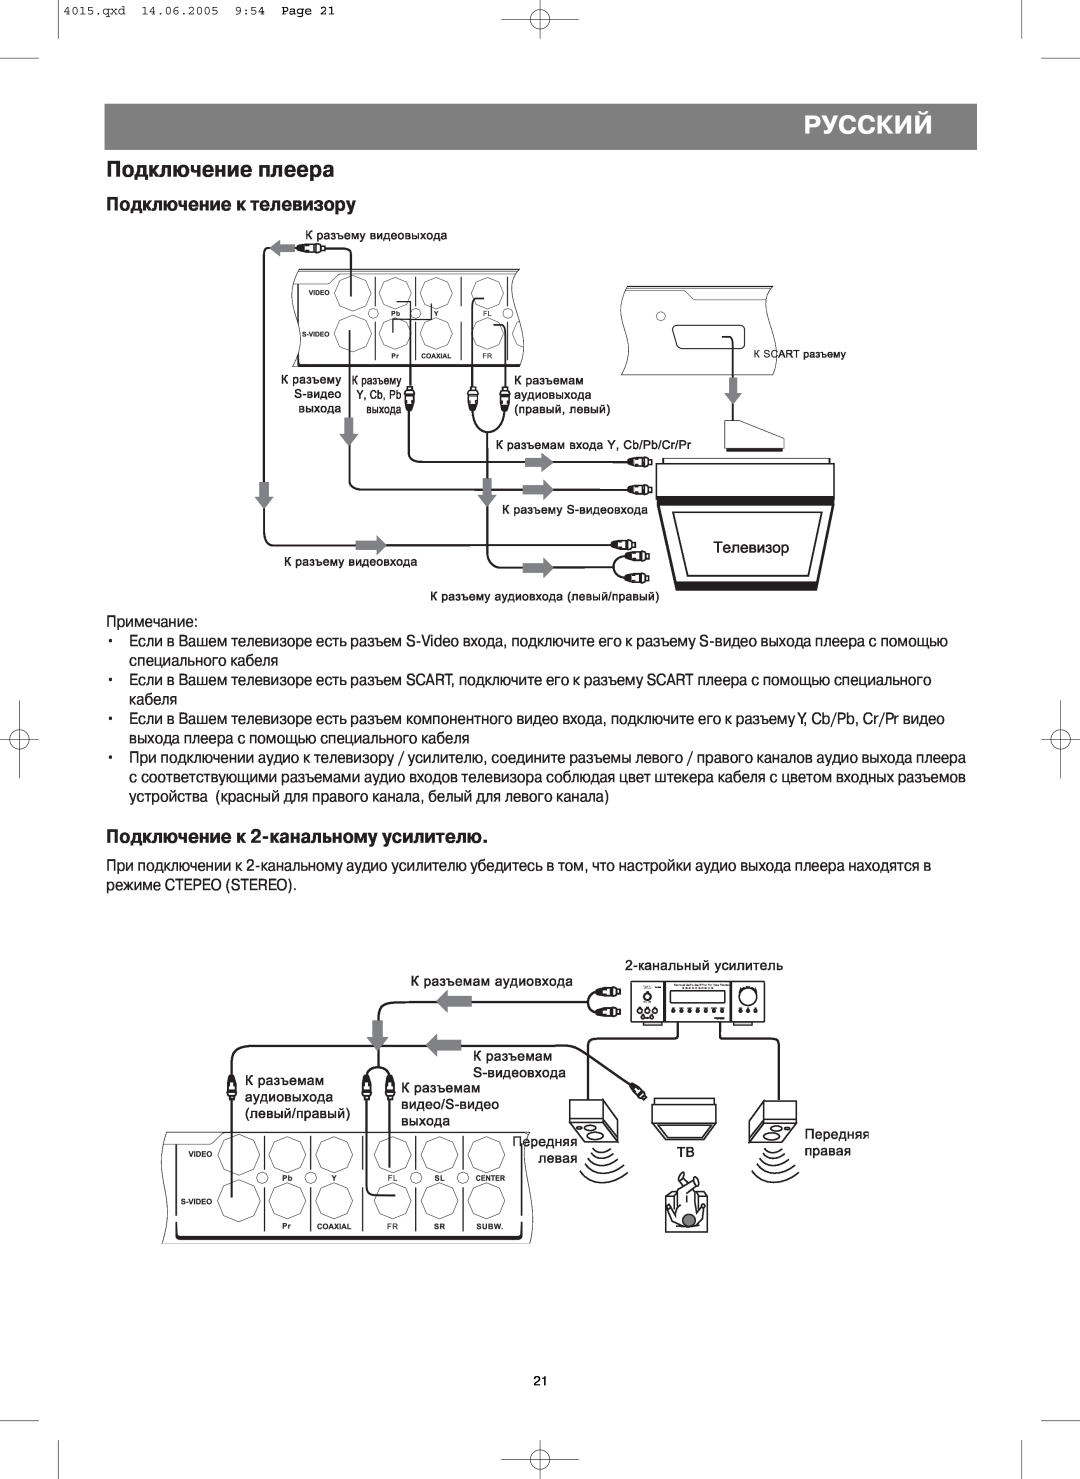 LG Electronics VT 4015 instruction manual Подключение плеера, Подключение к телевизору, Подключение к 2усилителю, Русский 